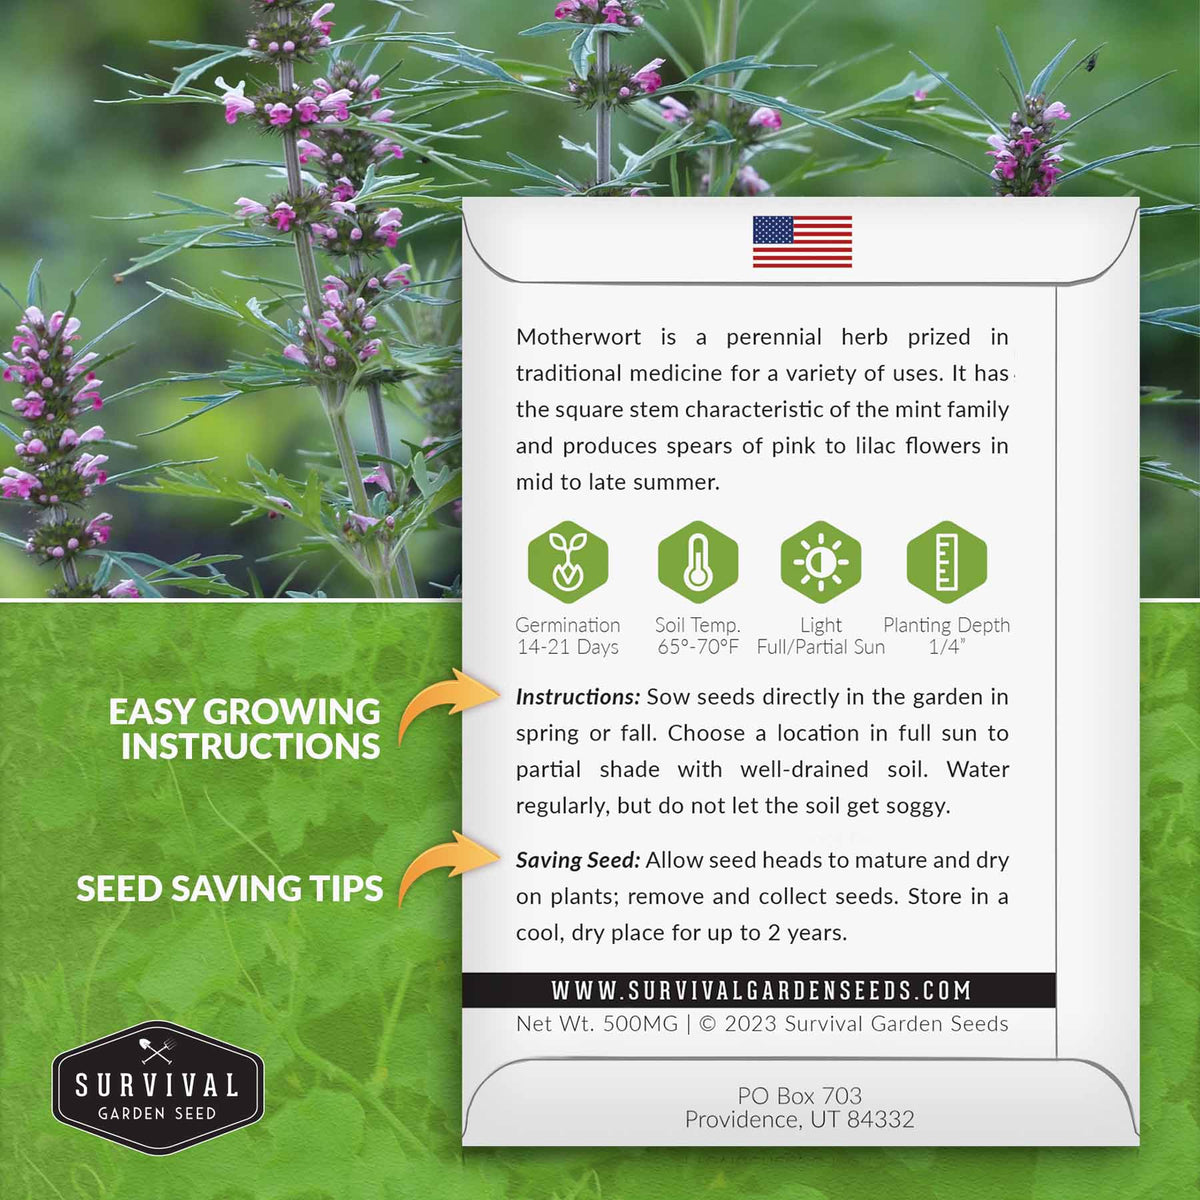 Motherwort seed growing instructions